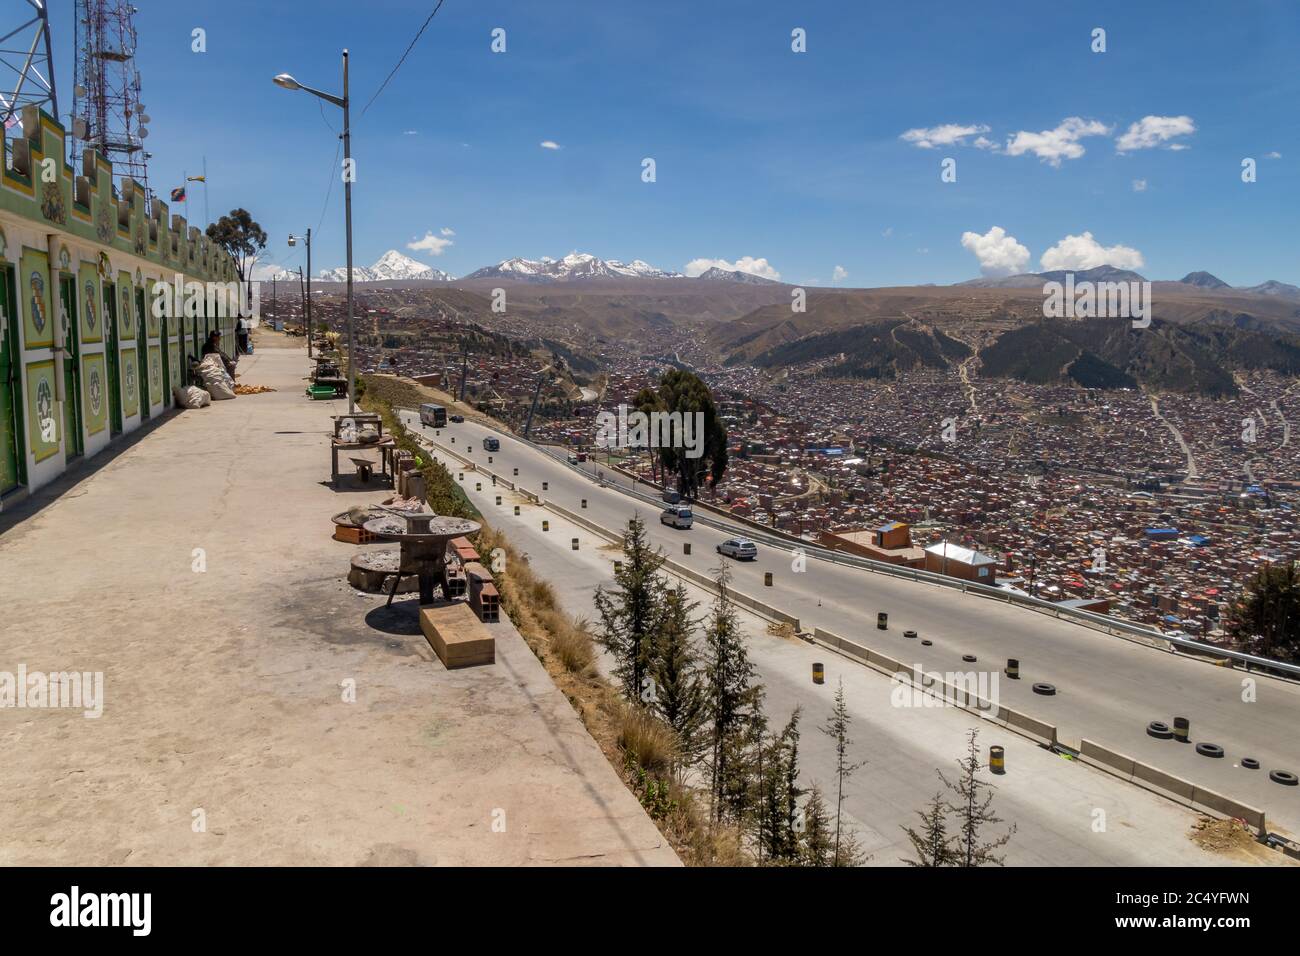 La Paz, Bolivia - september 30, 2018: fortune teller's shacks in the El Alto neighborhood of La Paz, Bolivia Stock Photo